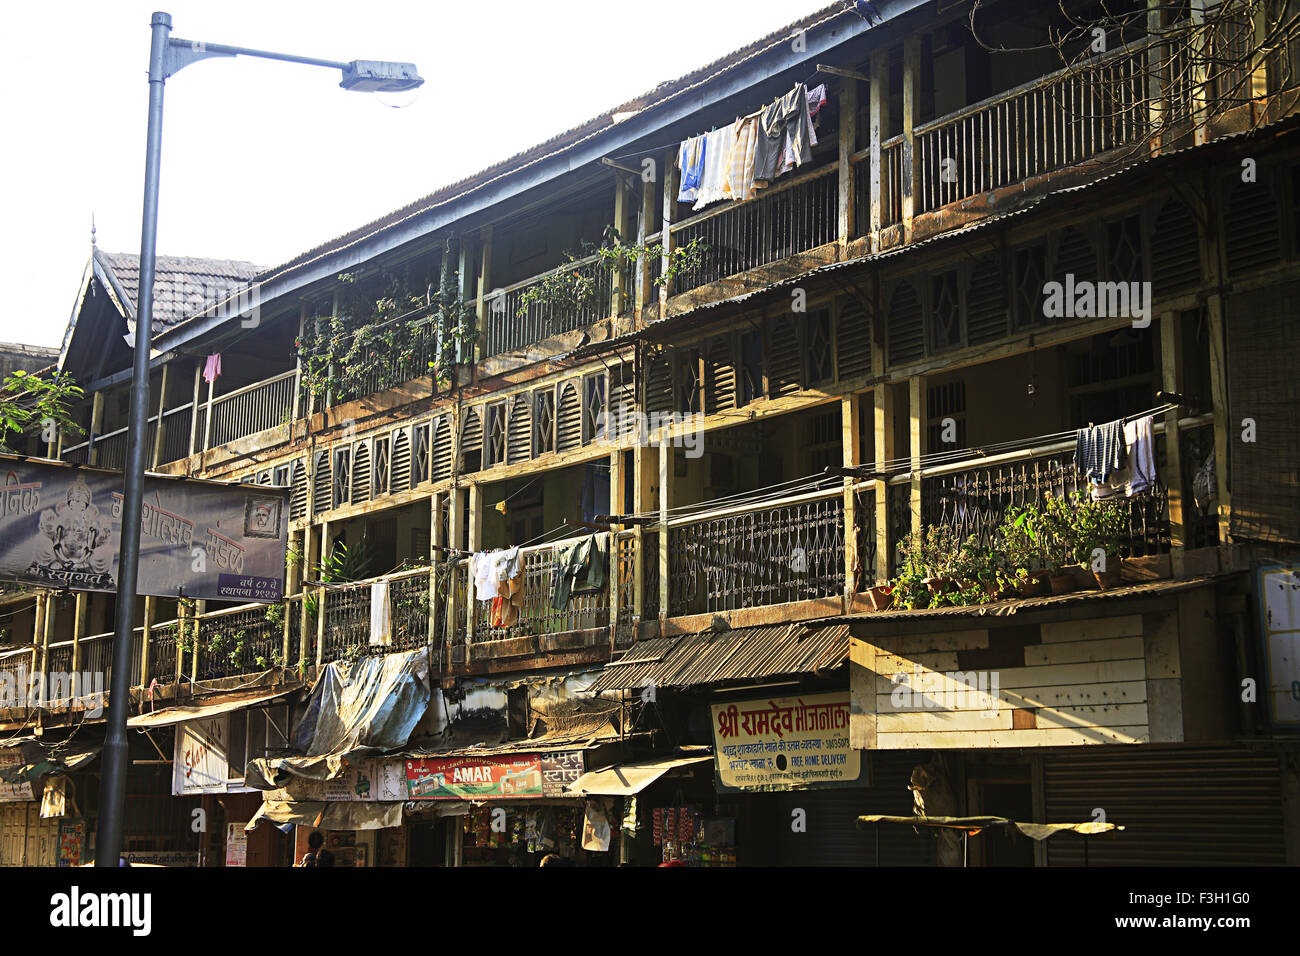 Old Dattatreya chawl mass urban housing ; Tukaram Javji marg ; Grant road ; Bombay now Mumbai ; Maharashtra ; India Stock Photo